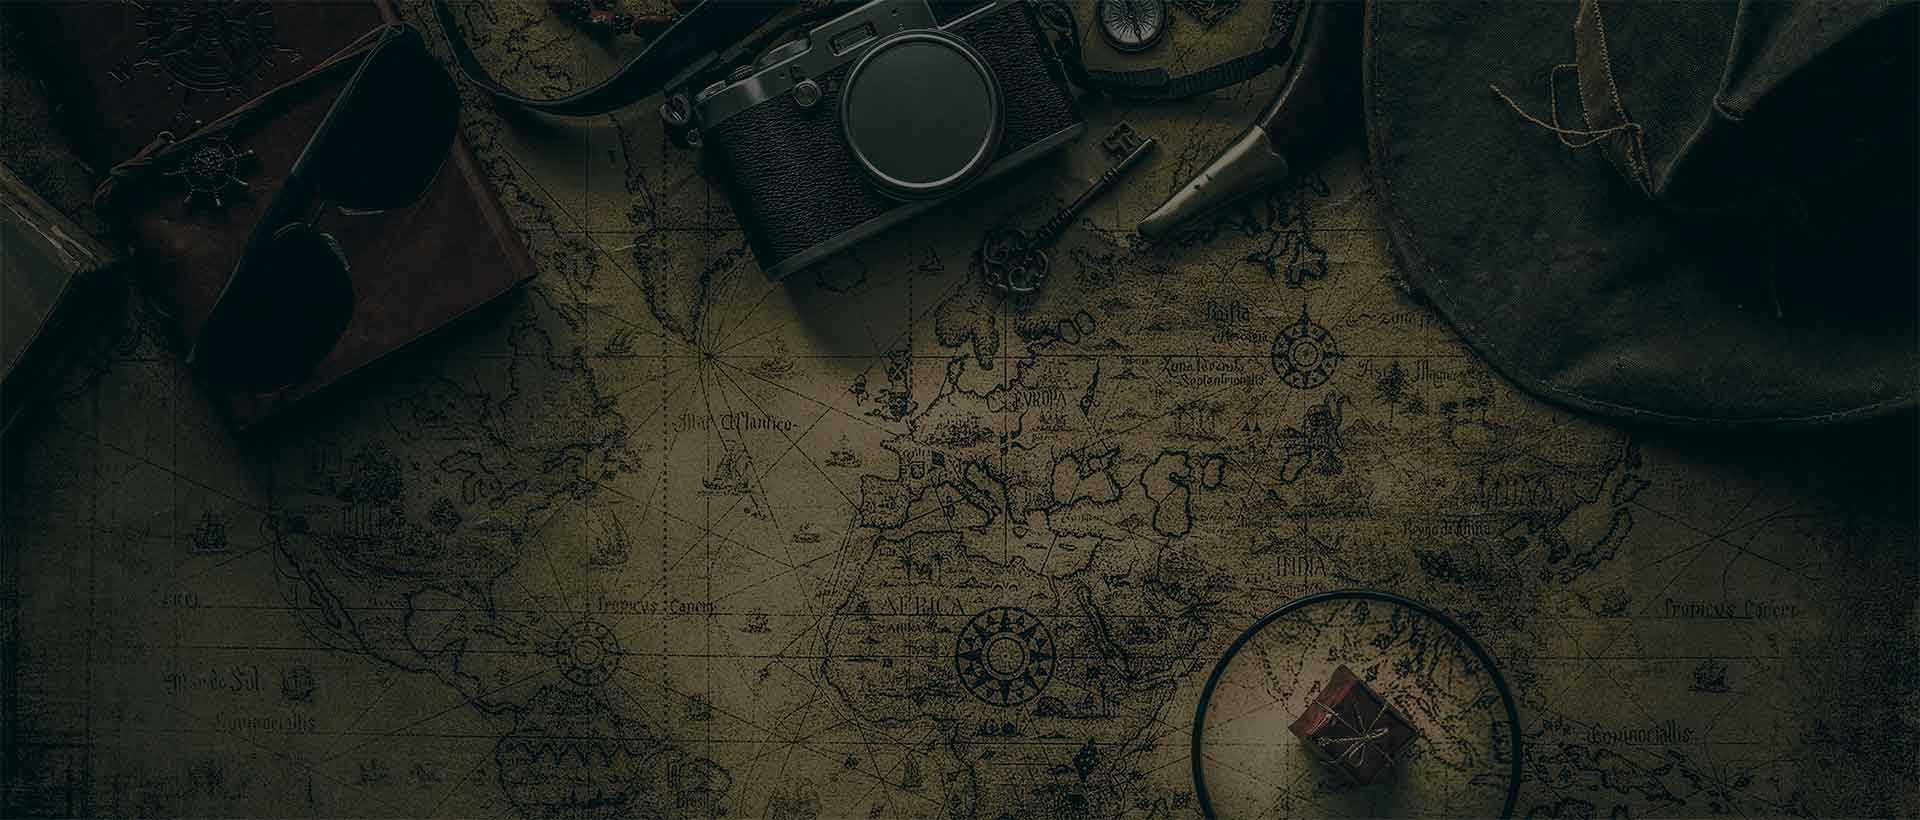 Image of Treasure Map and various supplies